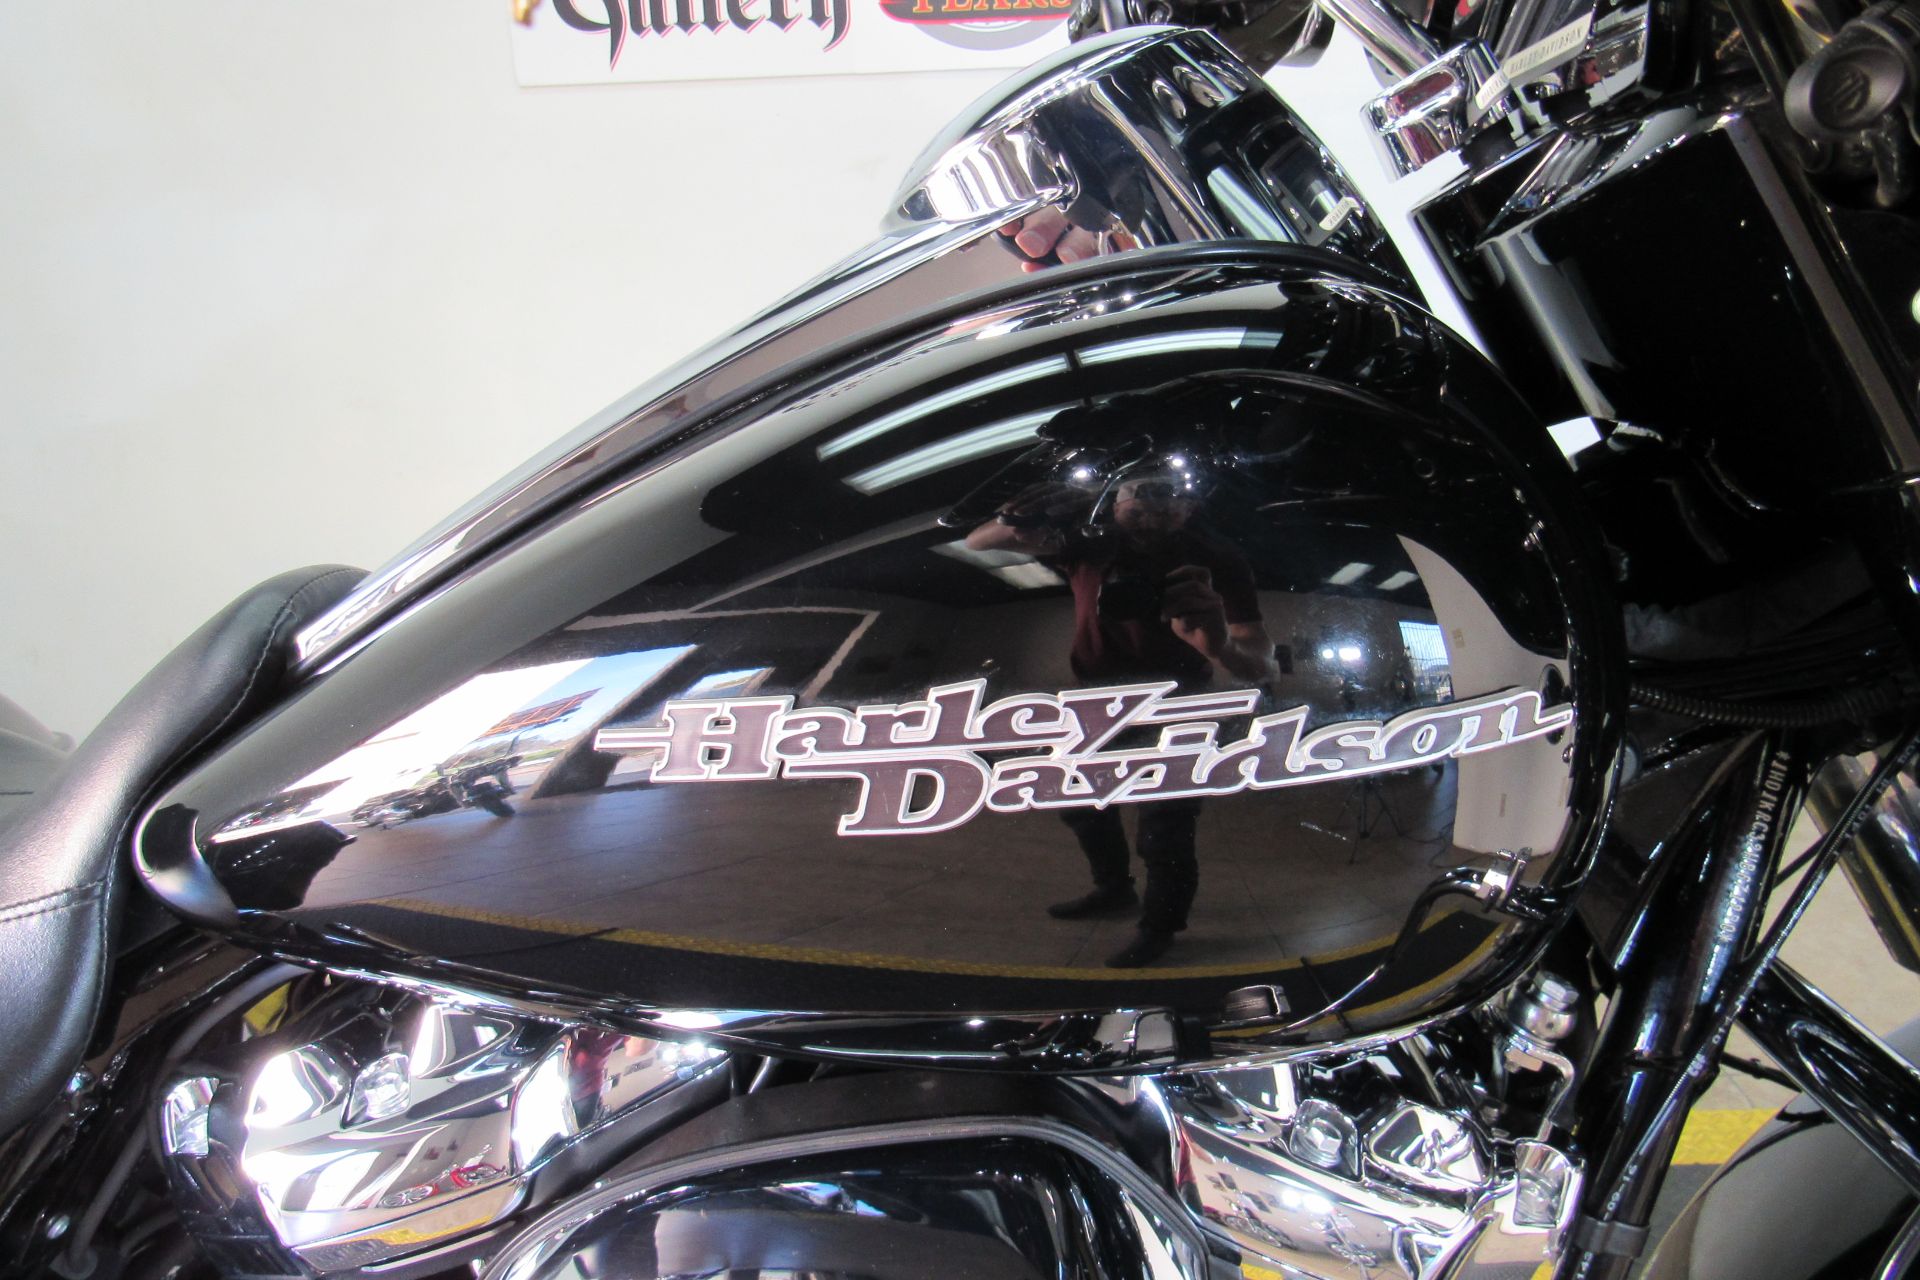 2017 Harley-Davidson Street Glide® Special in Temecula, California - Photo 7